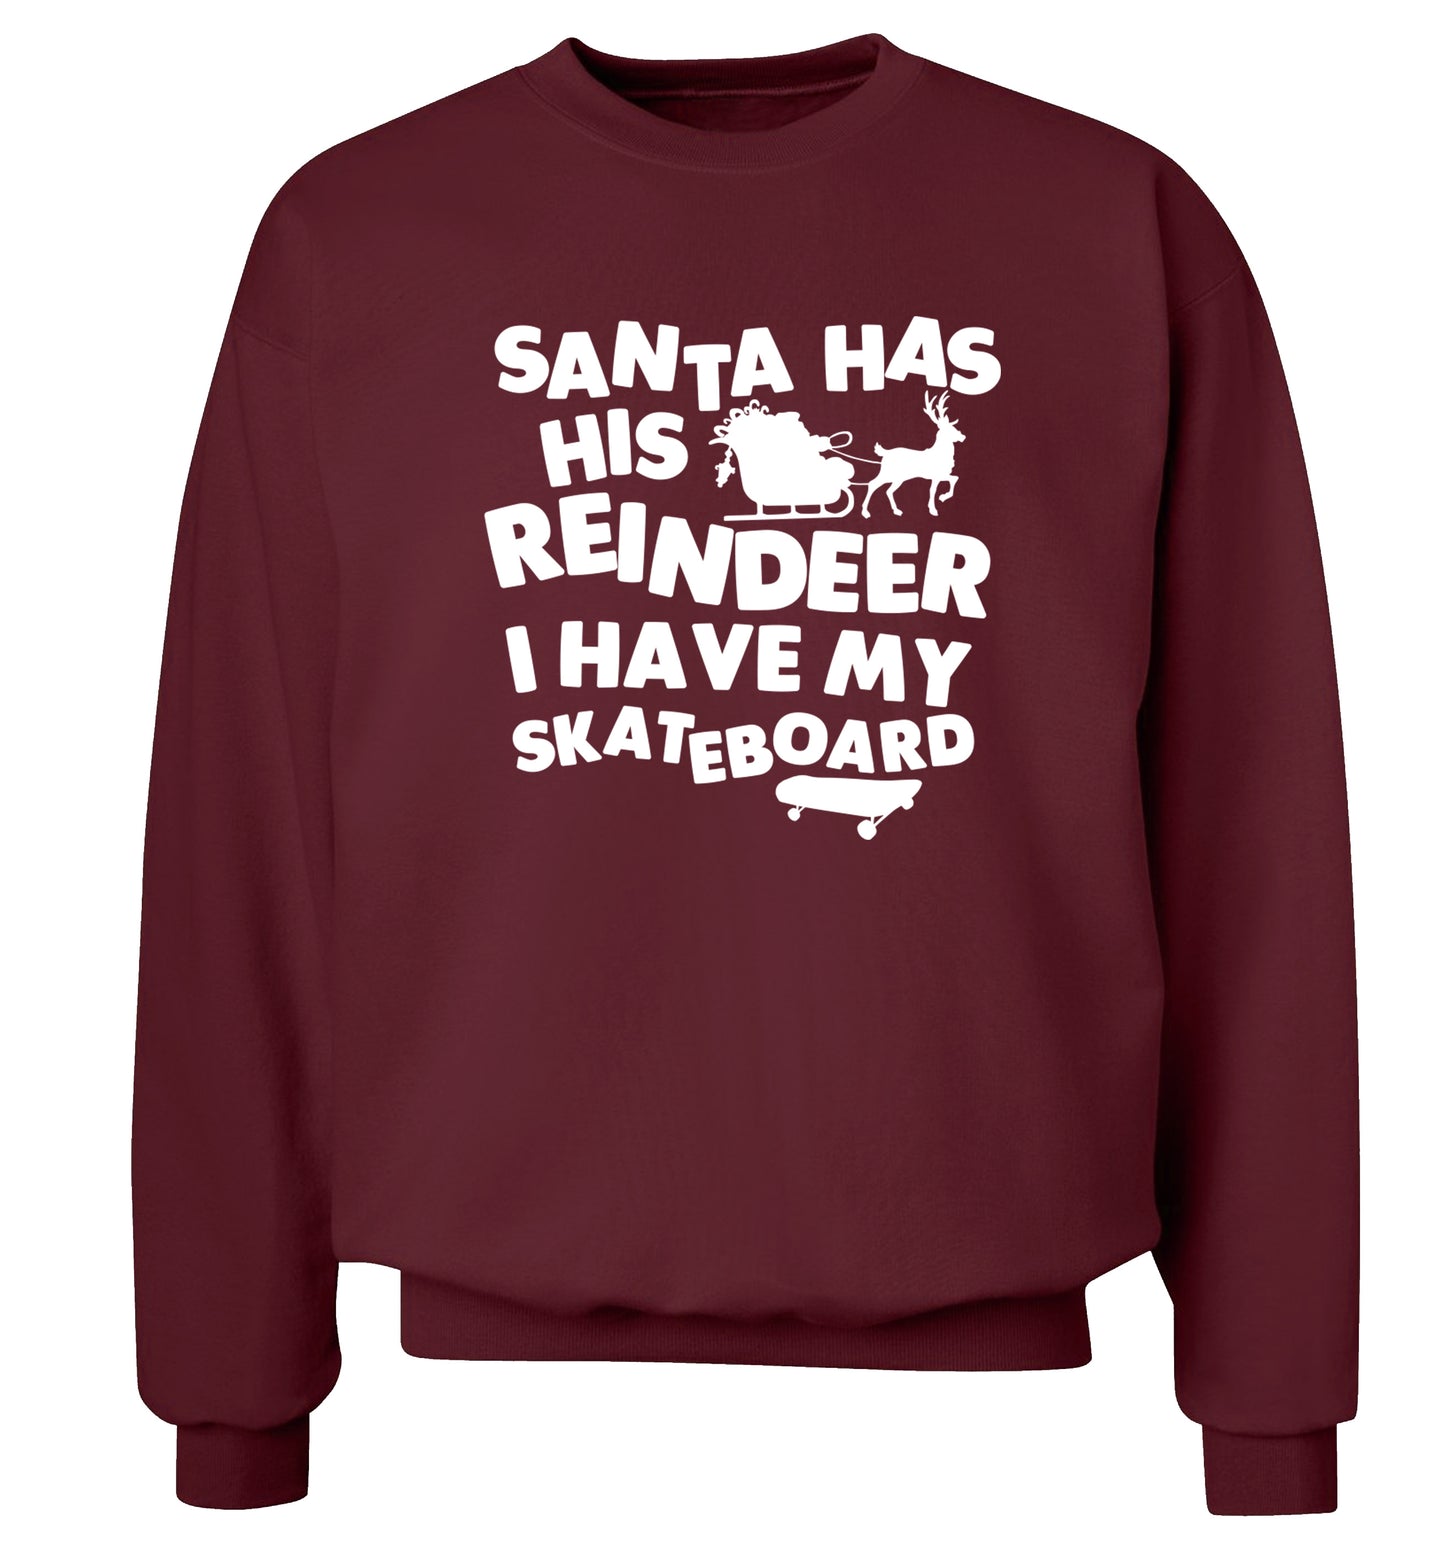 Santa has his reindeer I have my skateboard Adult's unisex maroon Sweater 2XL